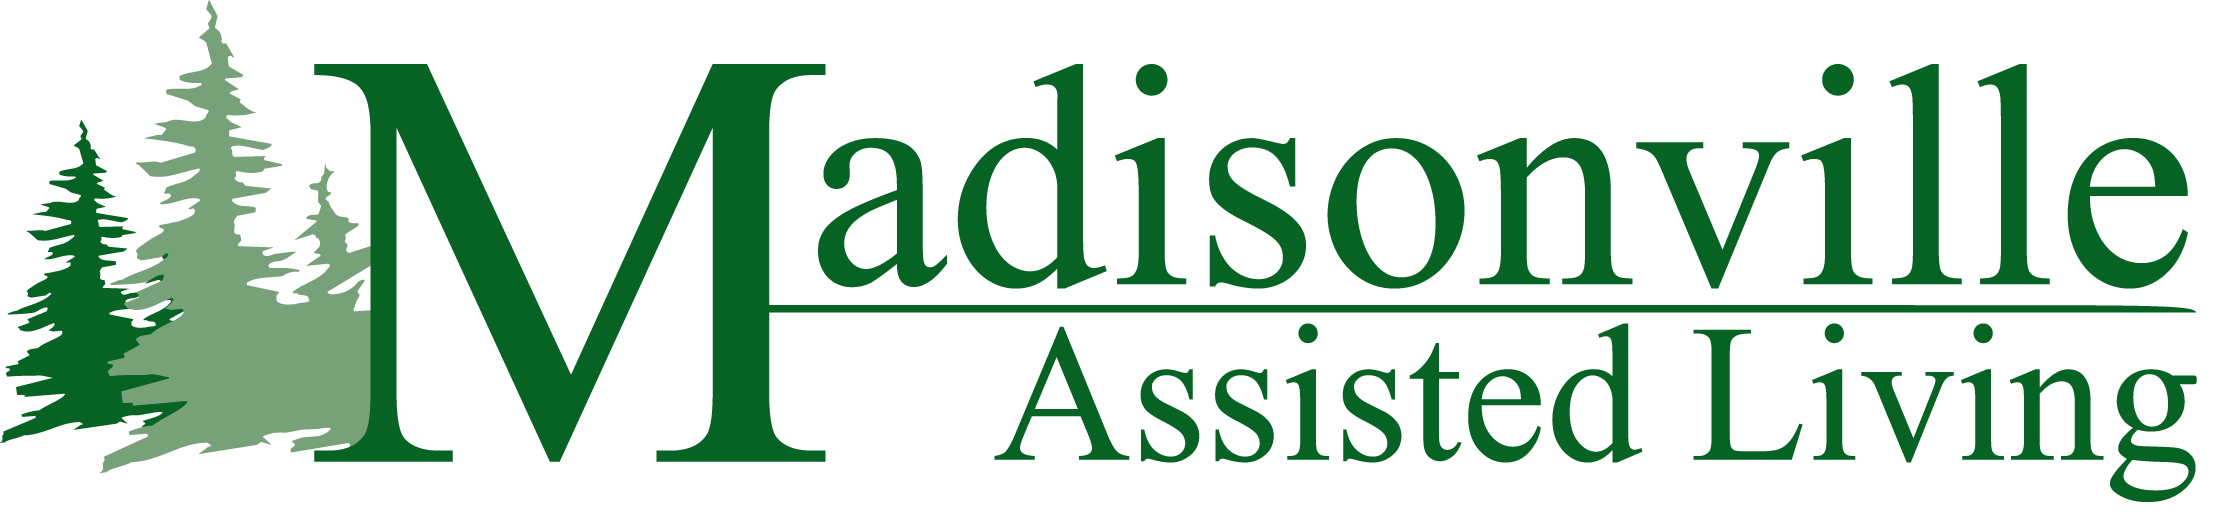 Madisonville Assisted Living logo